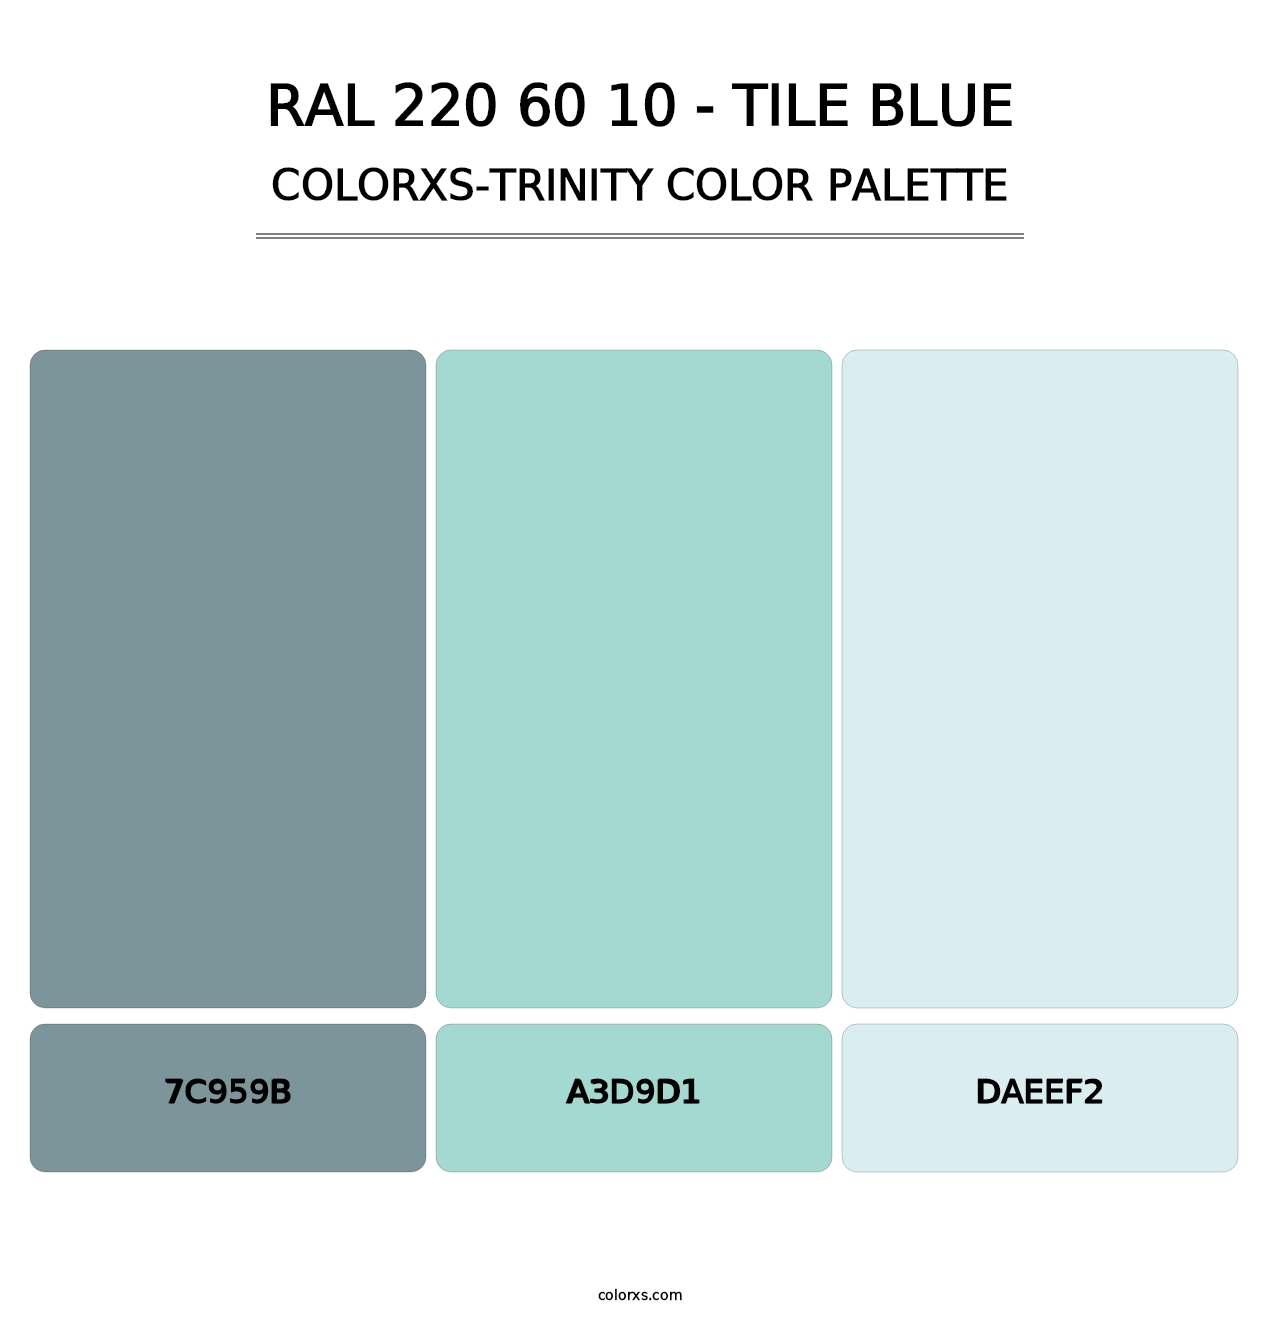 RAL 220 60 10 - Tile Blue - Colorxs Trinity Palette